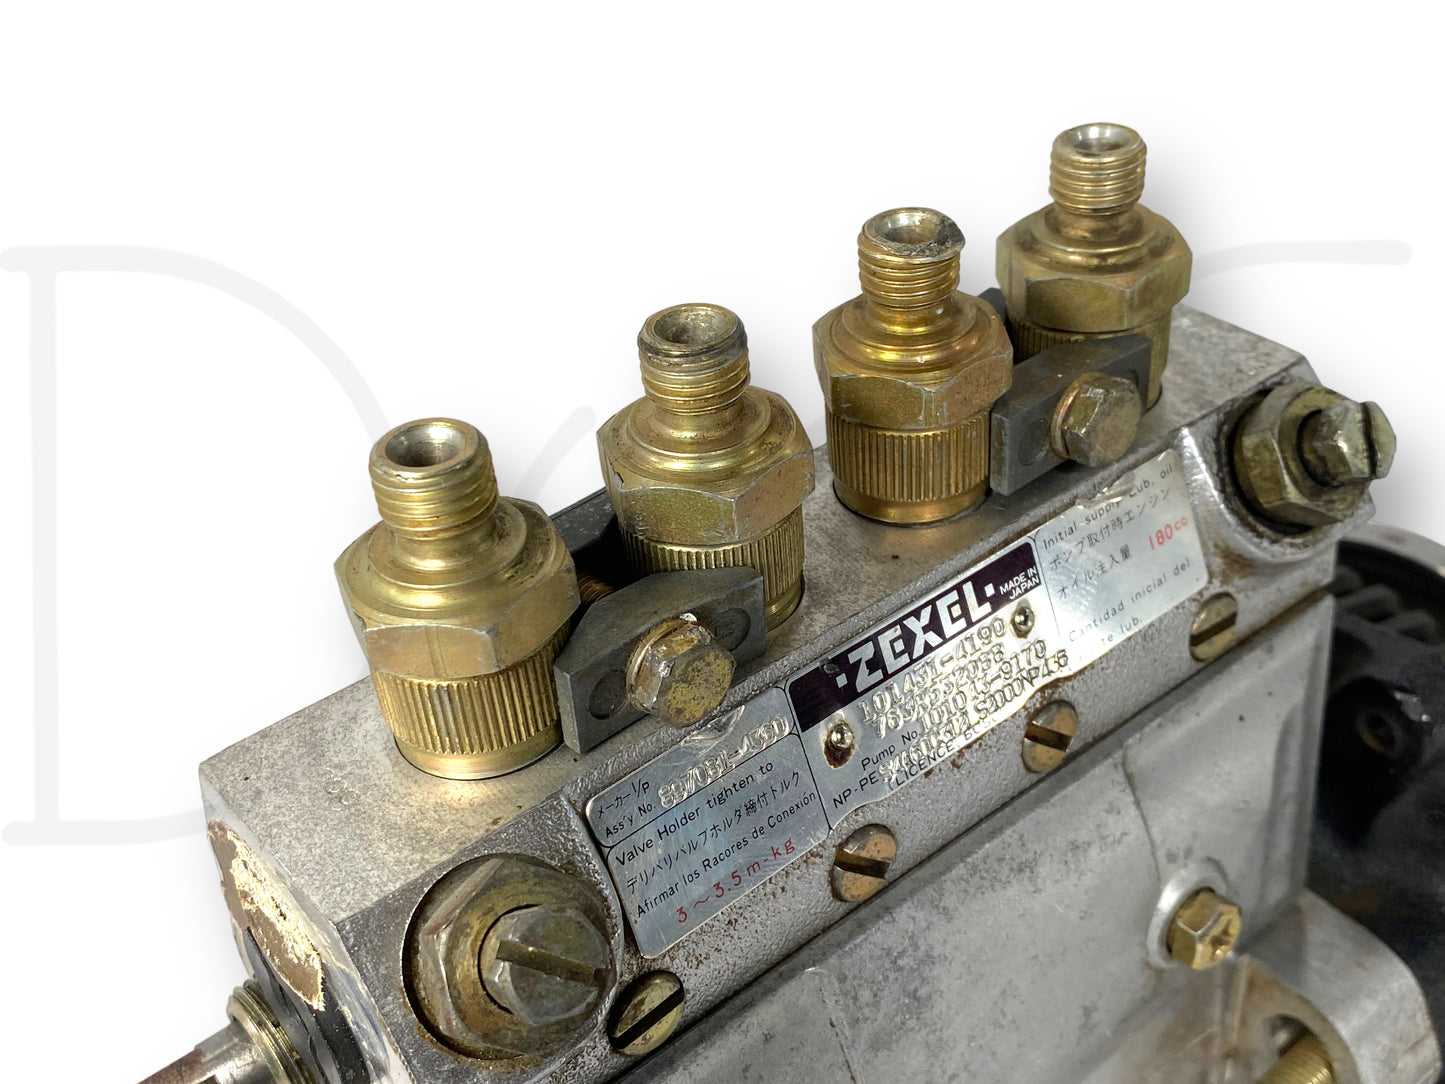 Isuzu Zexel Fuel Injection Pump 101043-9170  *Untested Core*